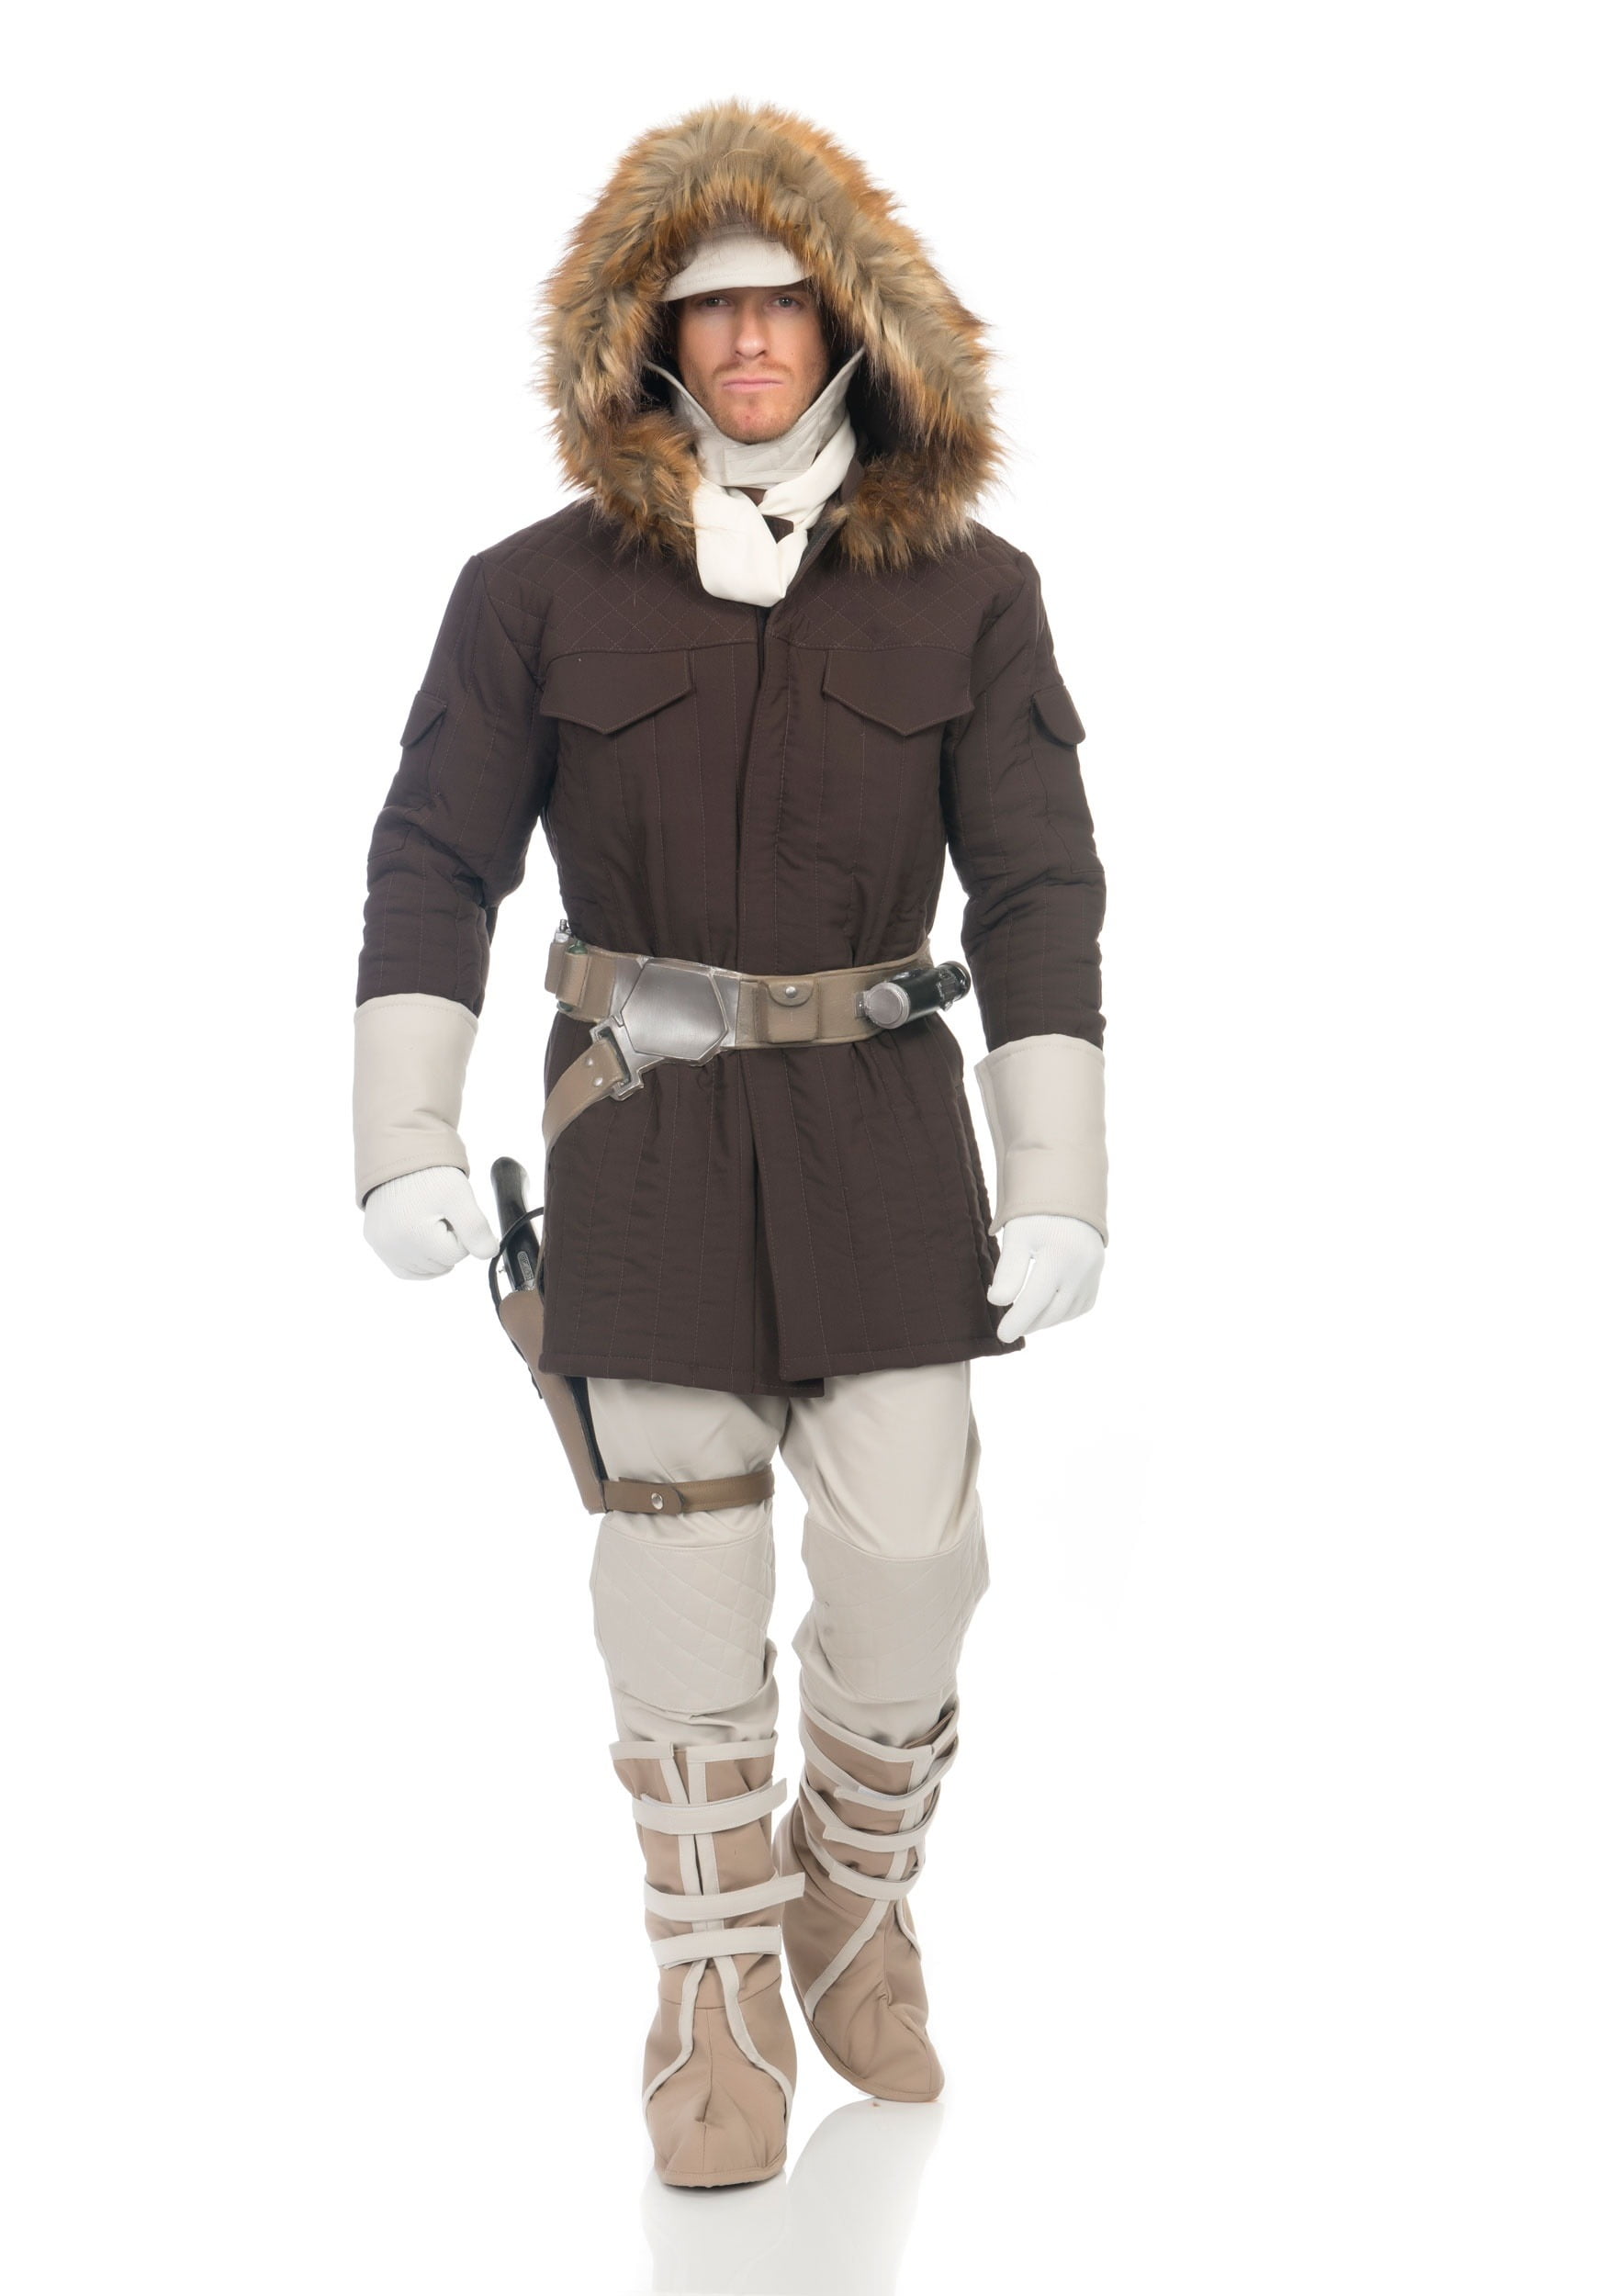 Star Wars Han Solo Hoth Costume For Men Com